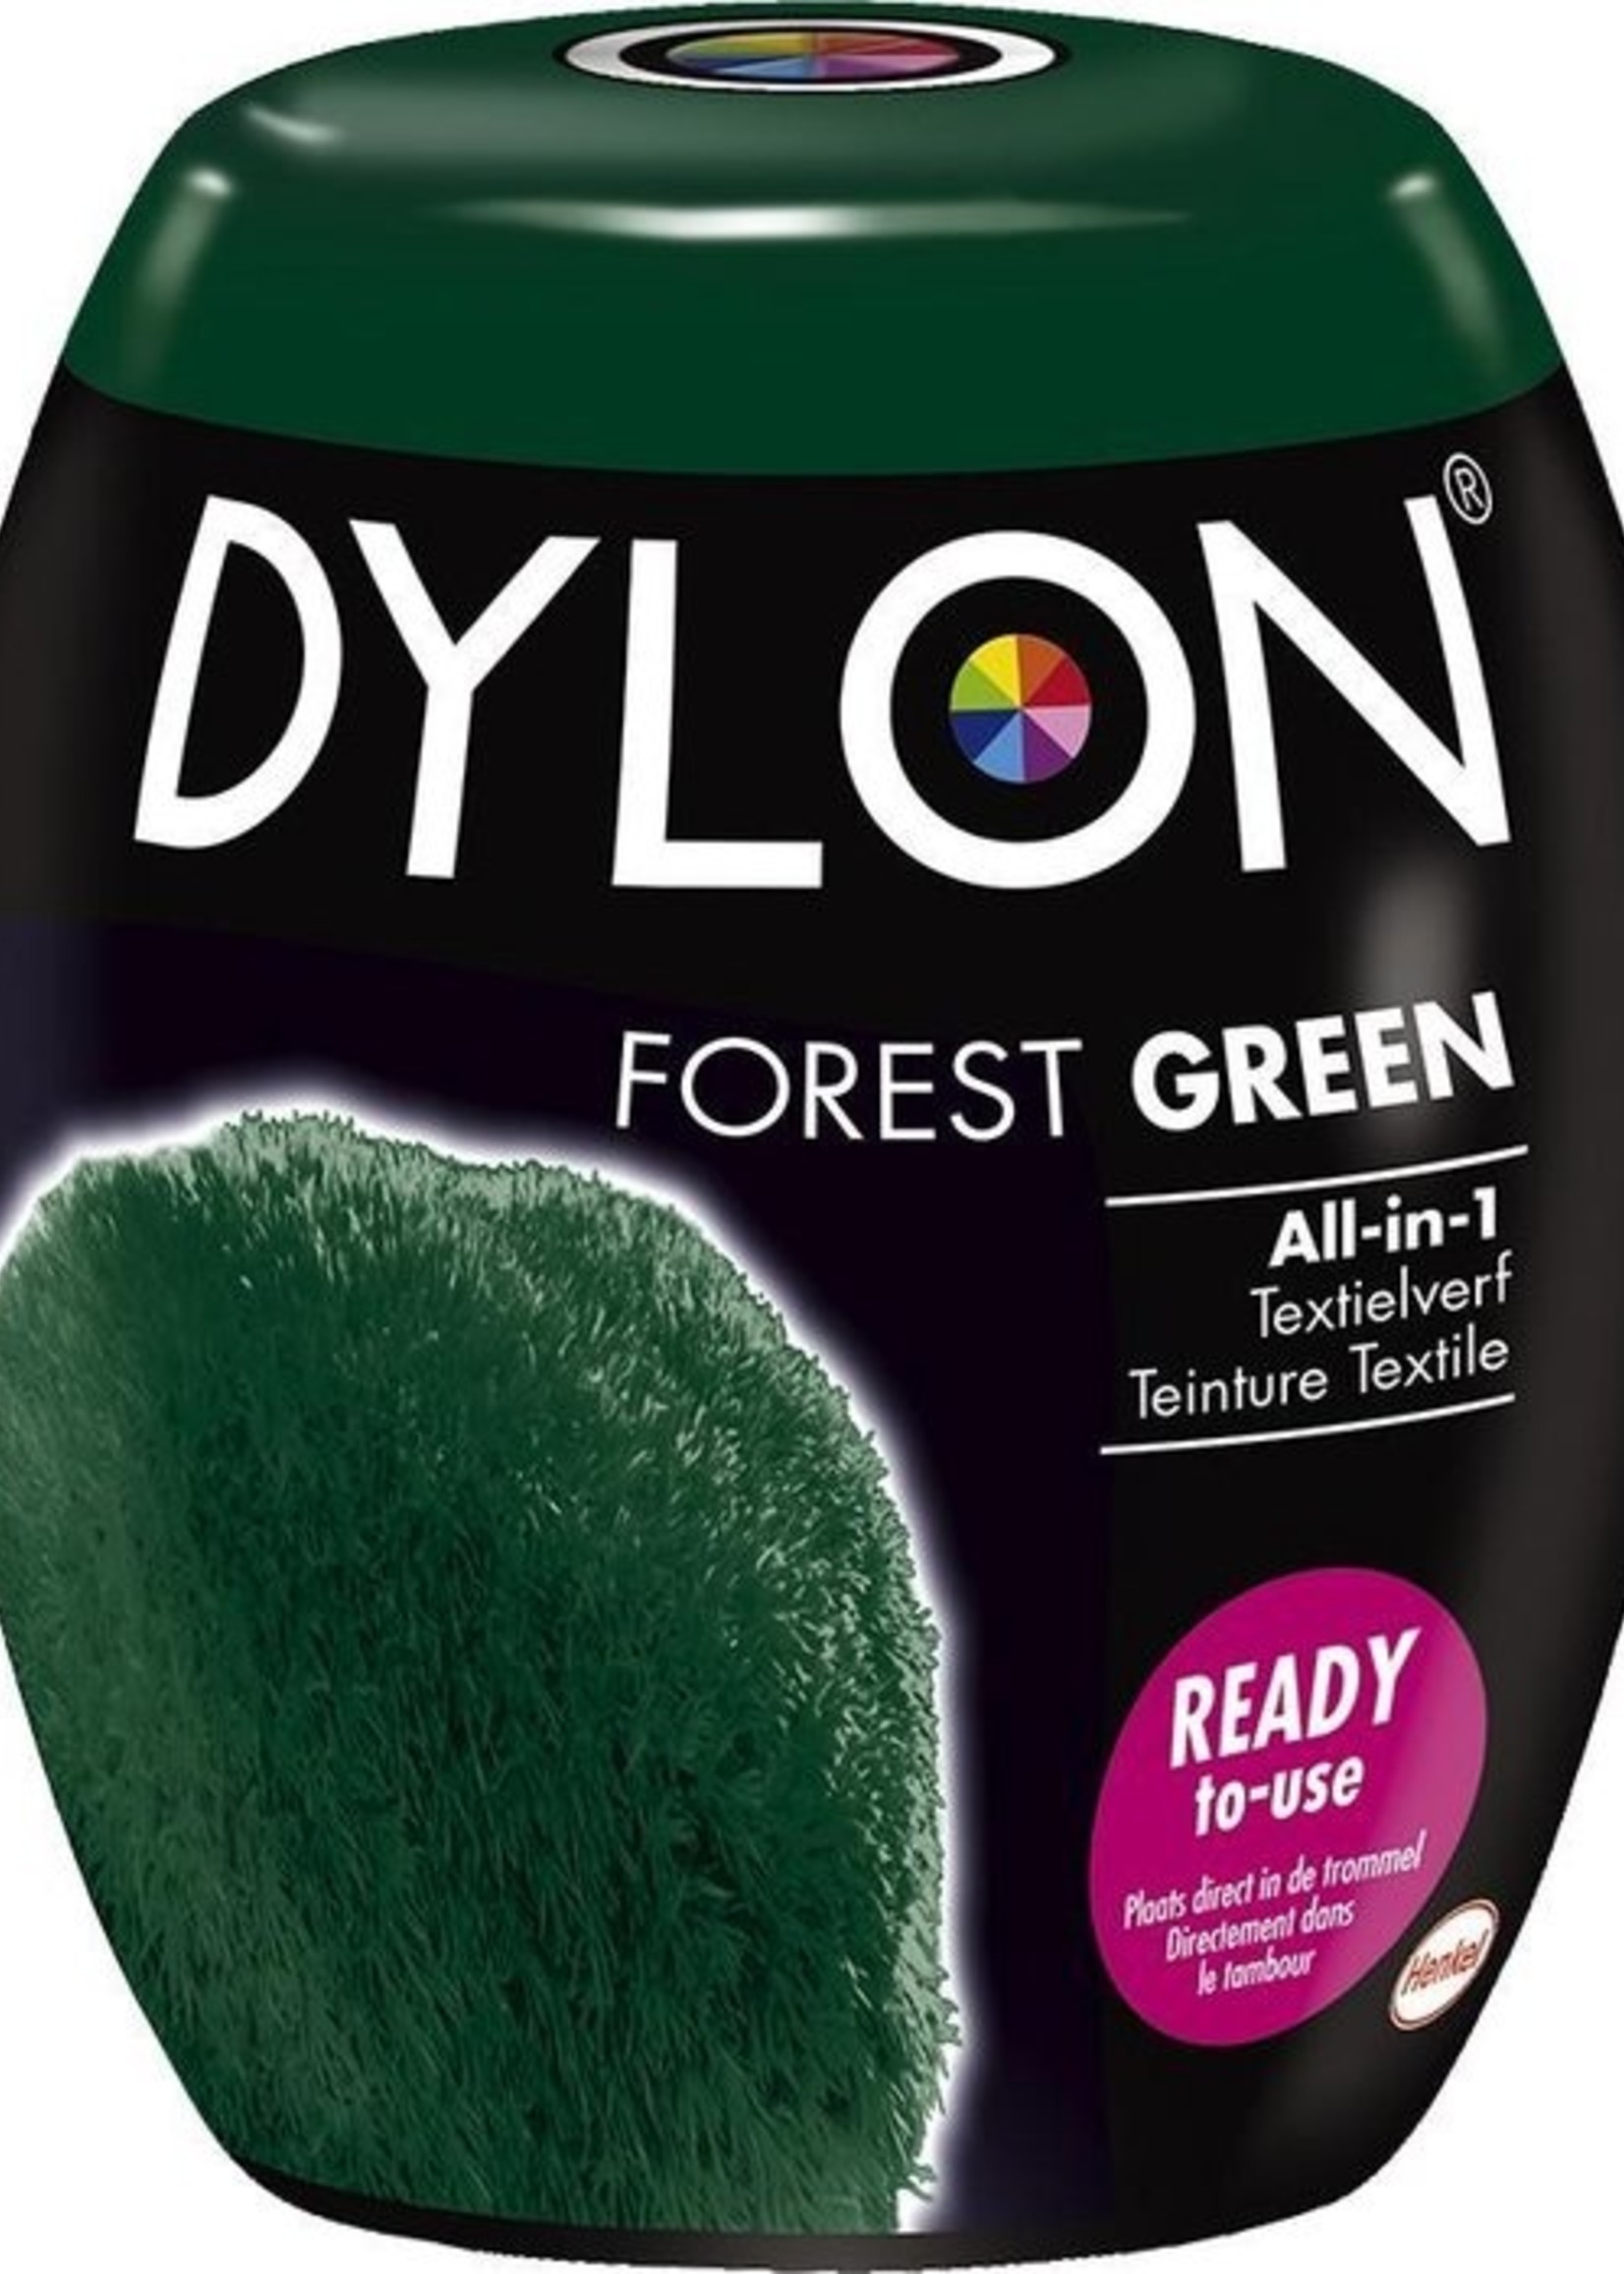 Dylon Pods Forest Green 350g